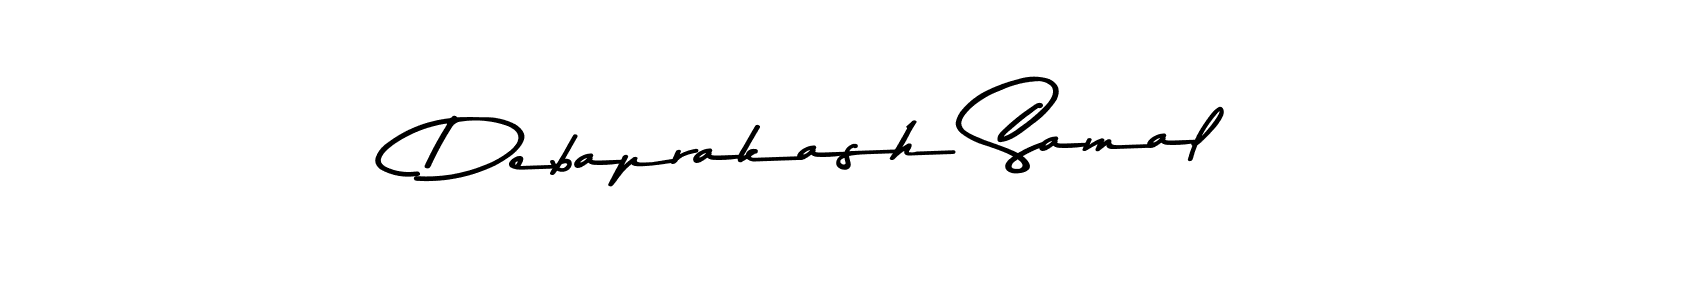 How to Draw Debaprakash Samal signature style? Asem Kandis PERSONAL USE is a latest design signature styles for name Debaprakash Samal. Debaprakash Samal signature style 9 images and pictures png